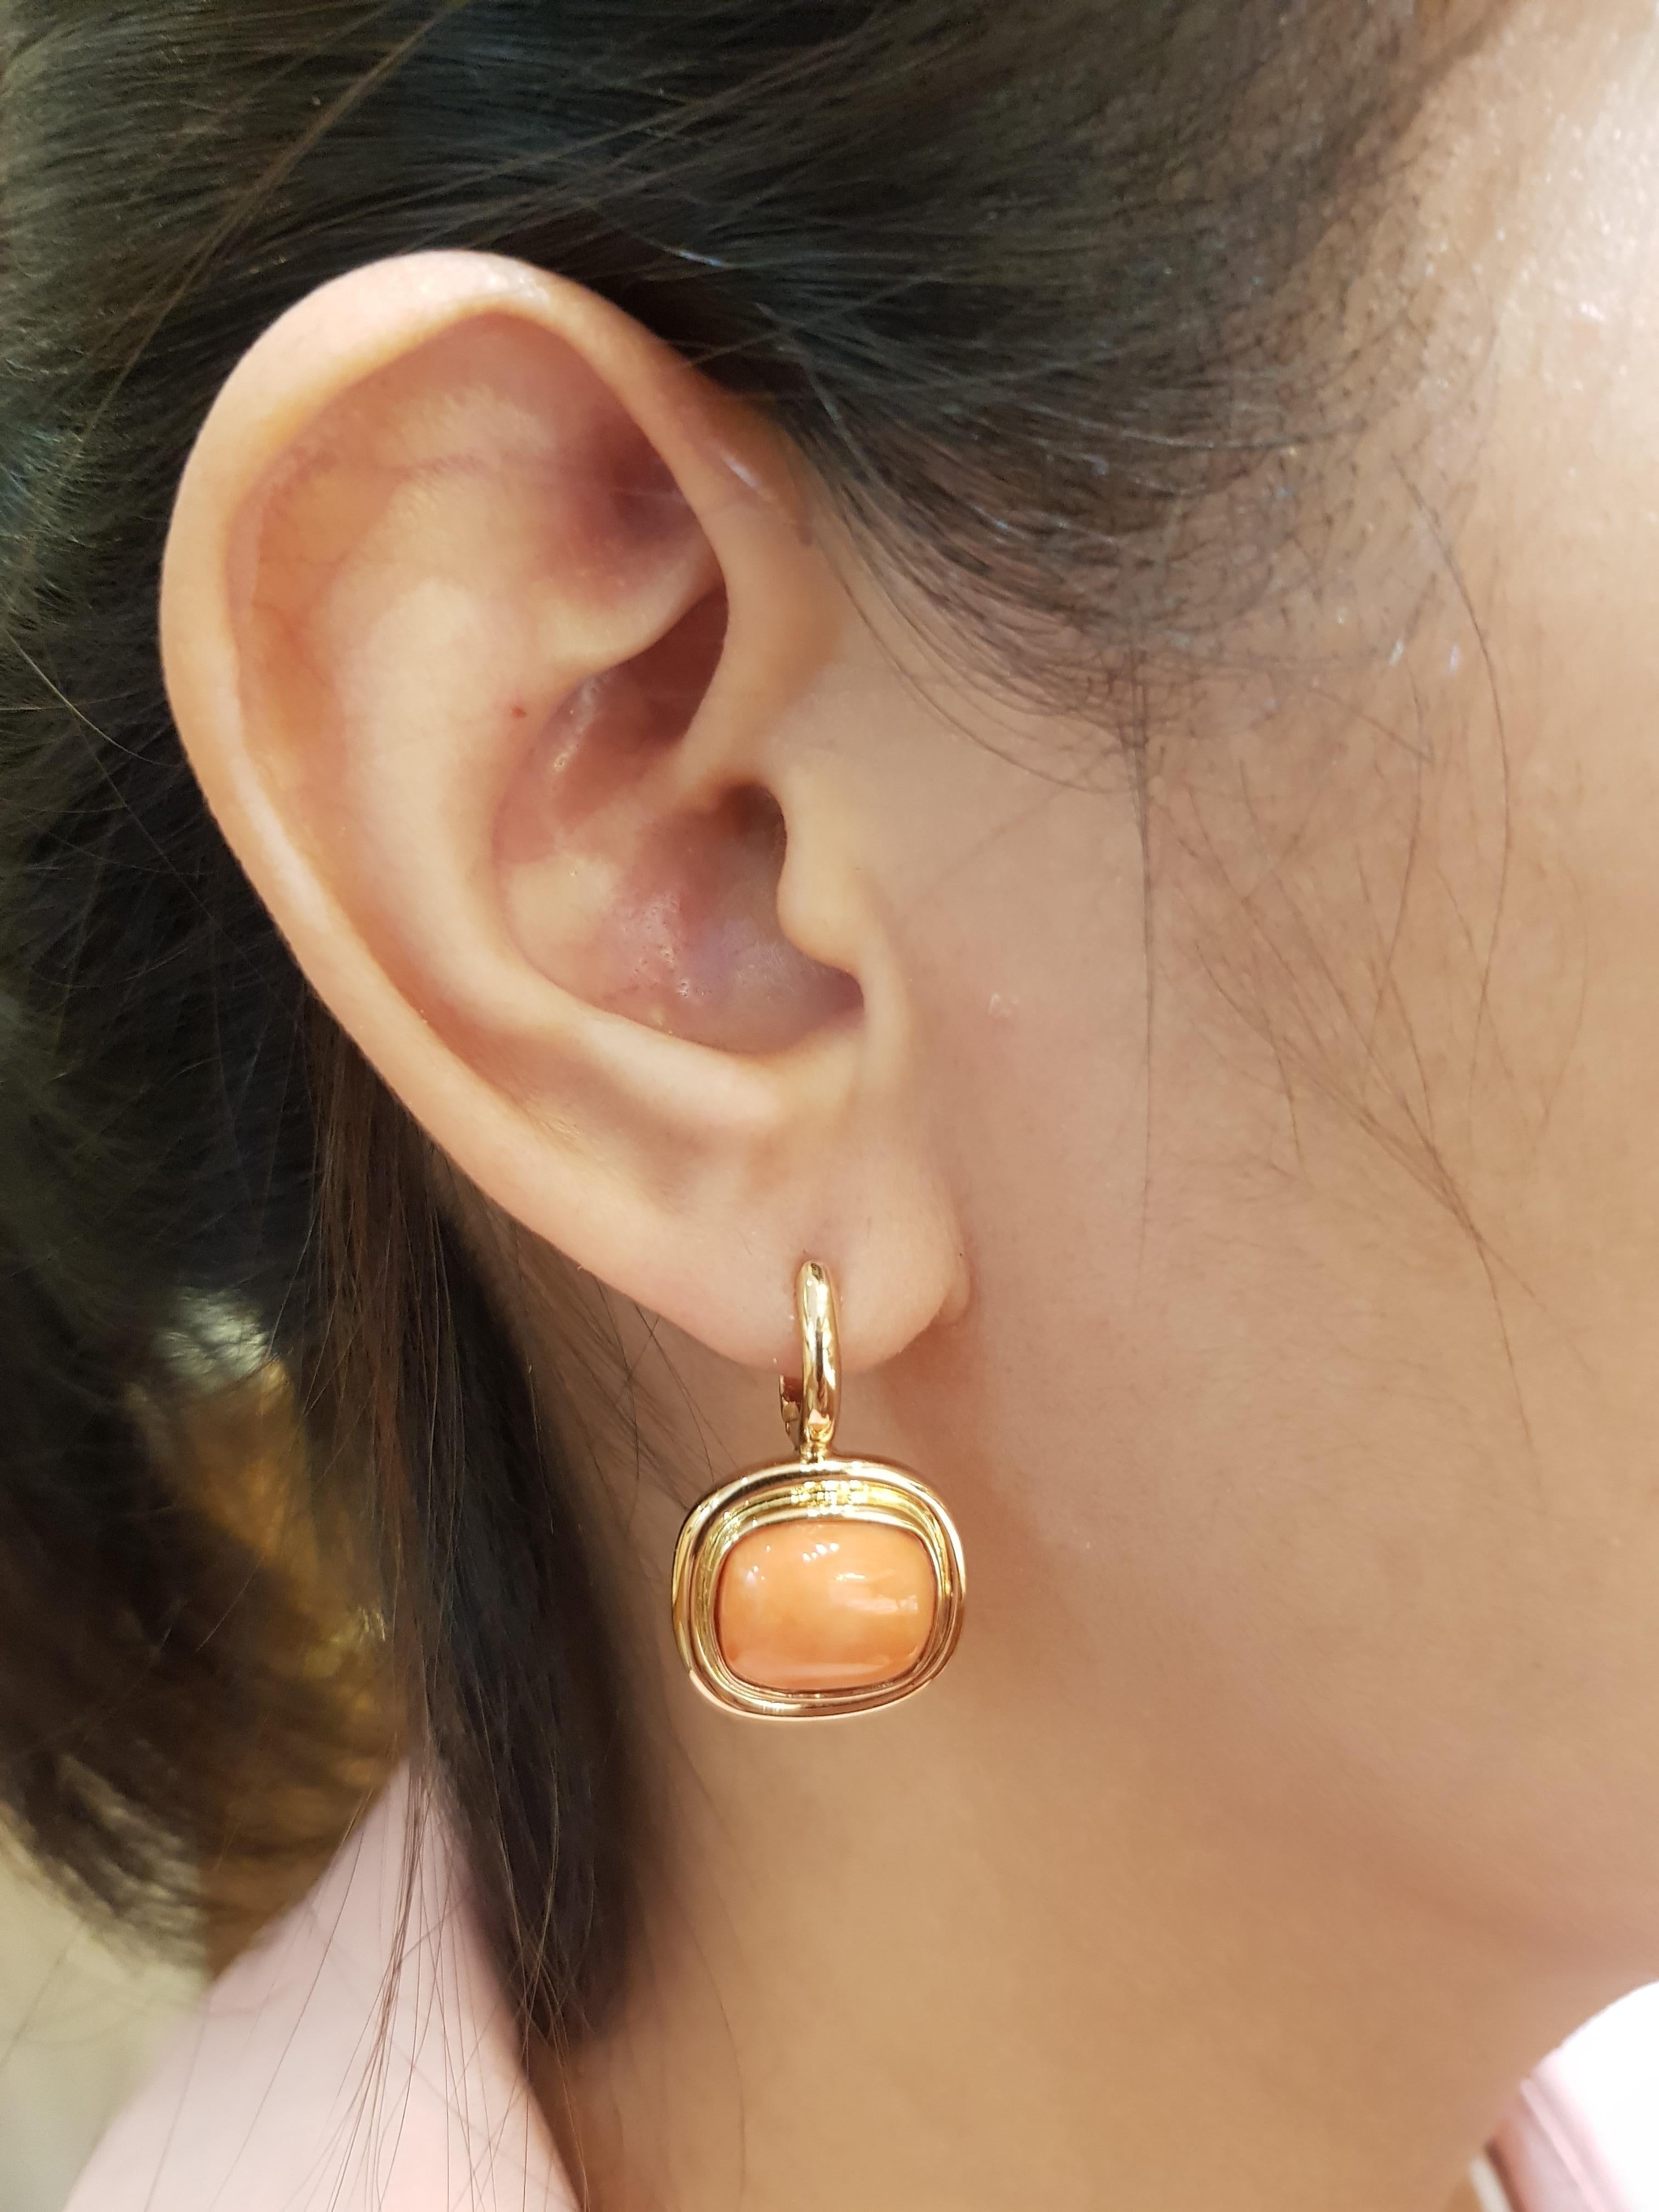 Coral 9.90 carat Earrings set in 18 Karat Rose Gold Settings

Width:  1.7 cm 
Length:  2.8 cm
Total Weight: 10.46 grams

